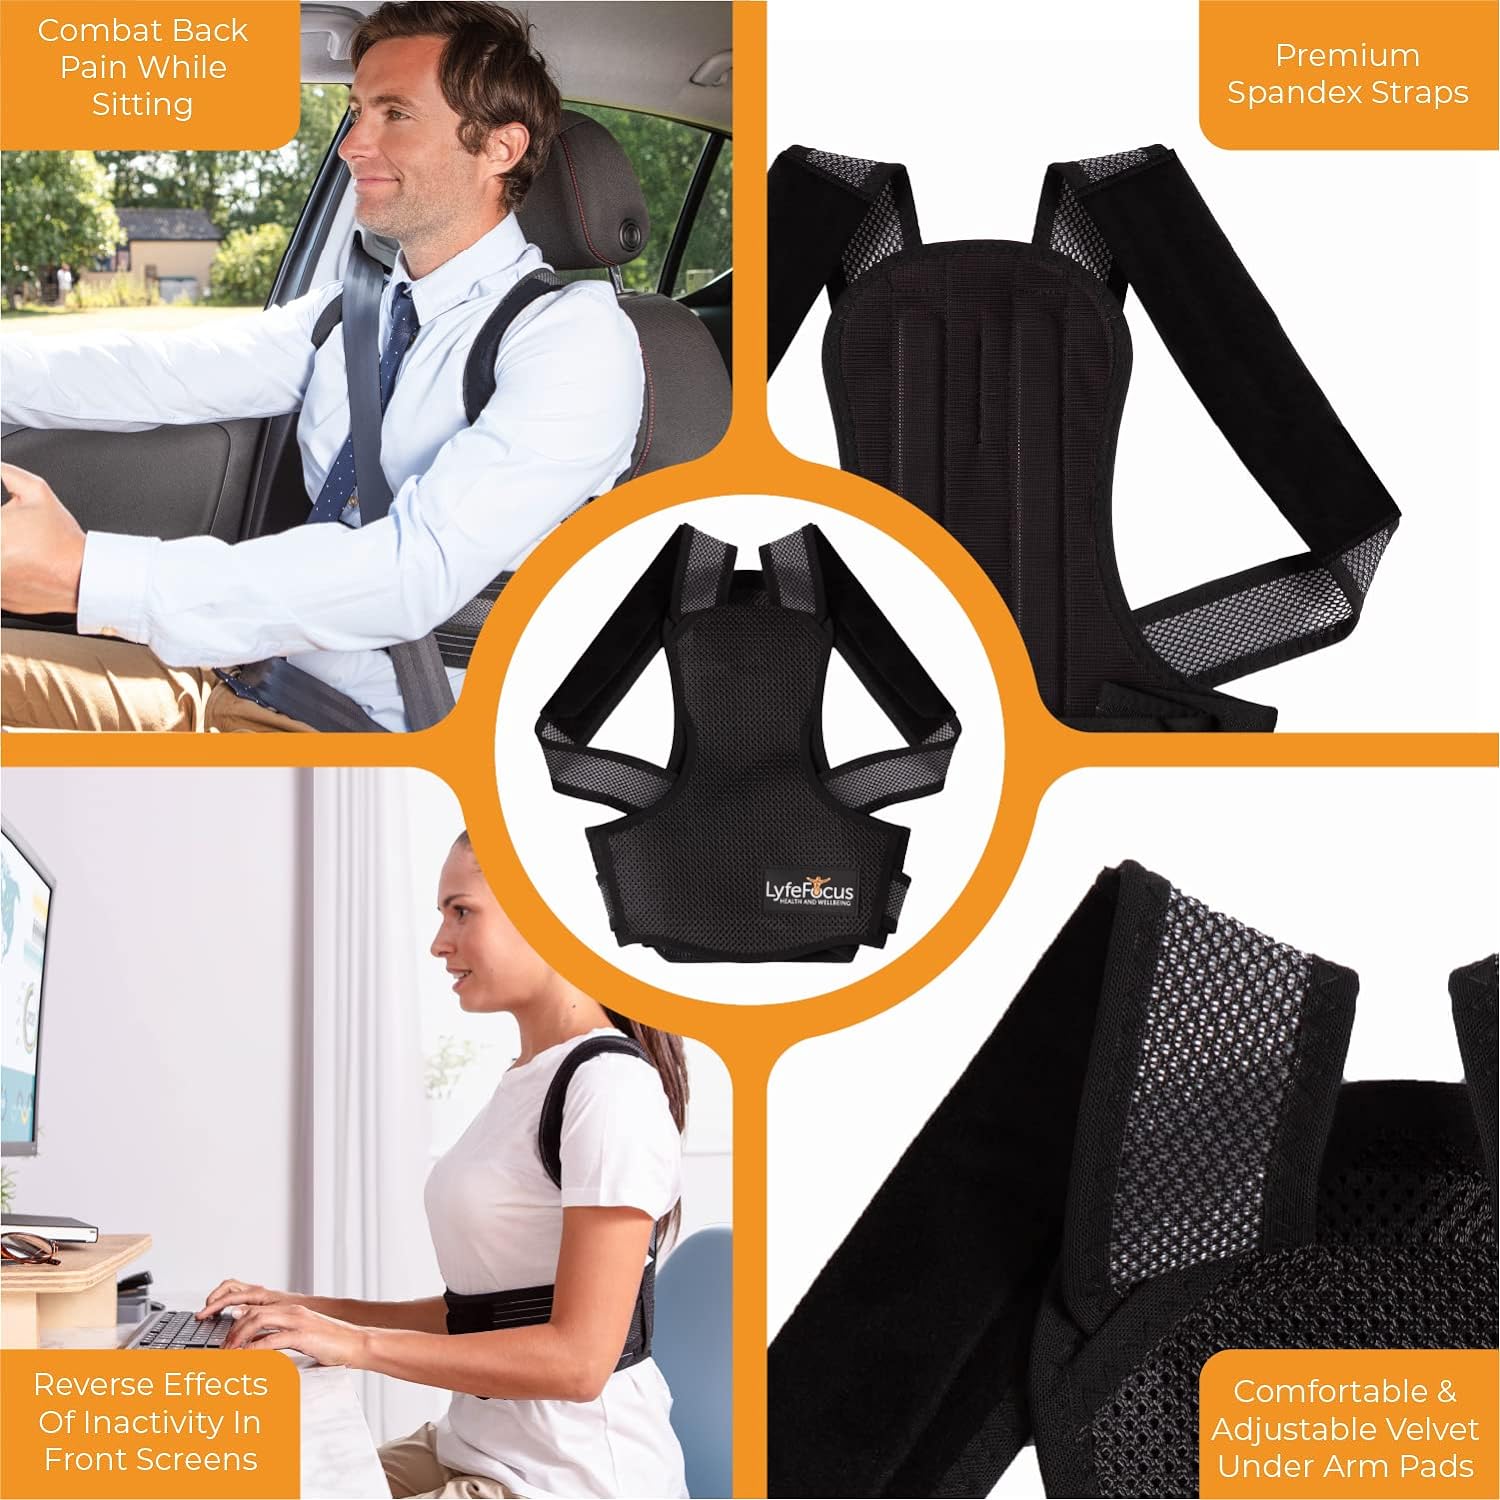 LyfeFocus S1 Premium Breathable Back Posture Corrector for Men & Women Large 0411